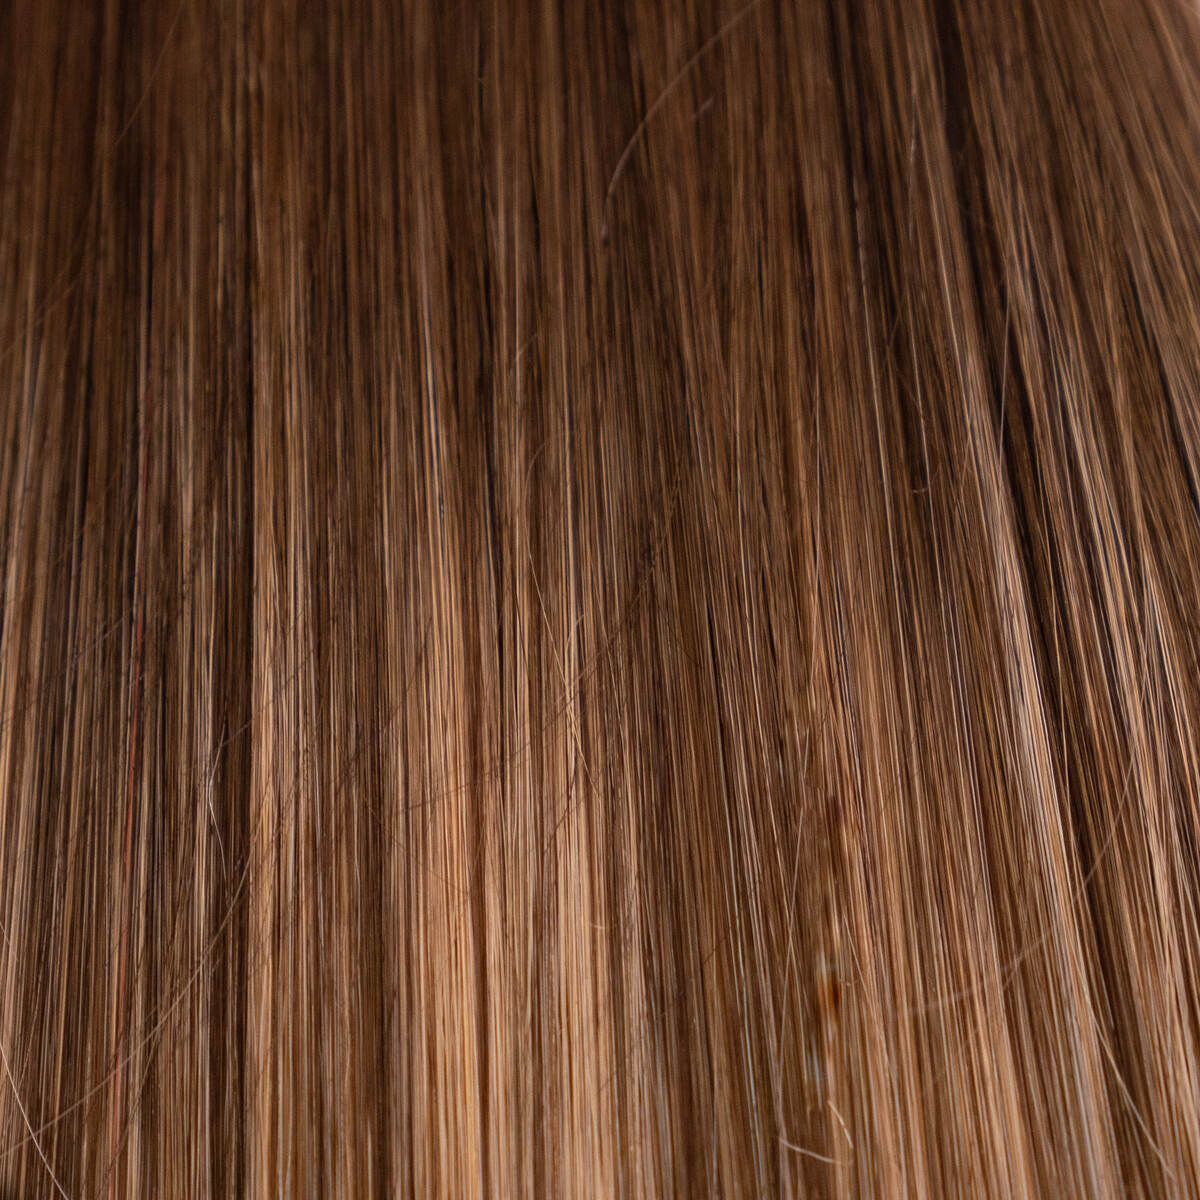 I-Tip 22" 25g Professional Hair Extensions - Balayage Dark Brown/Dirty Blonde #2/#18